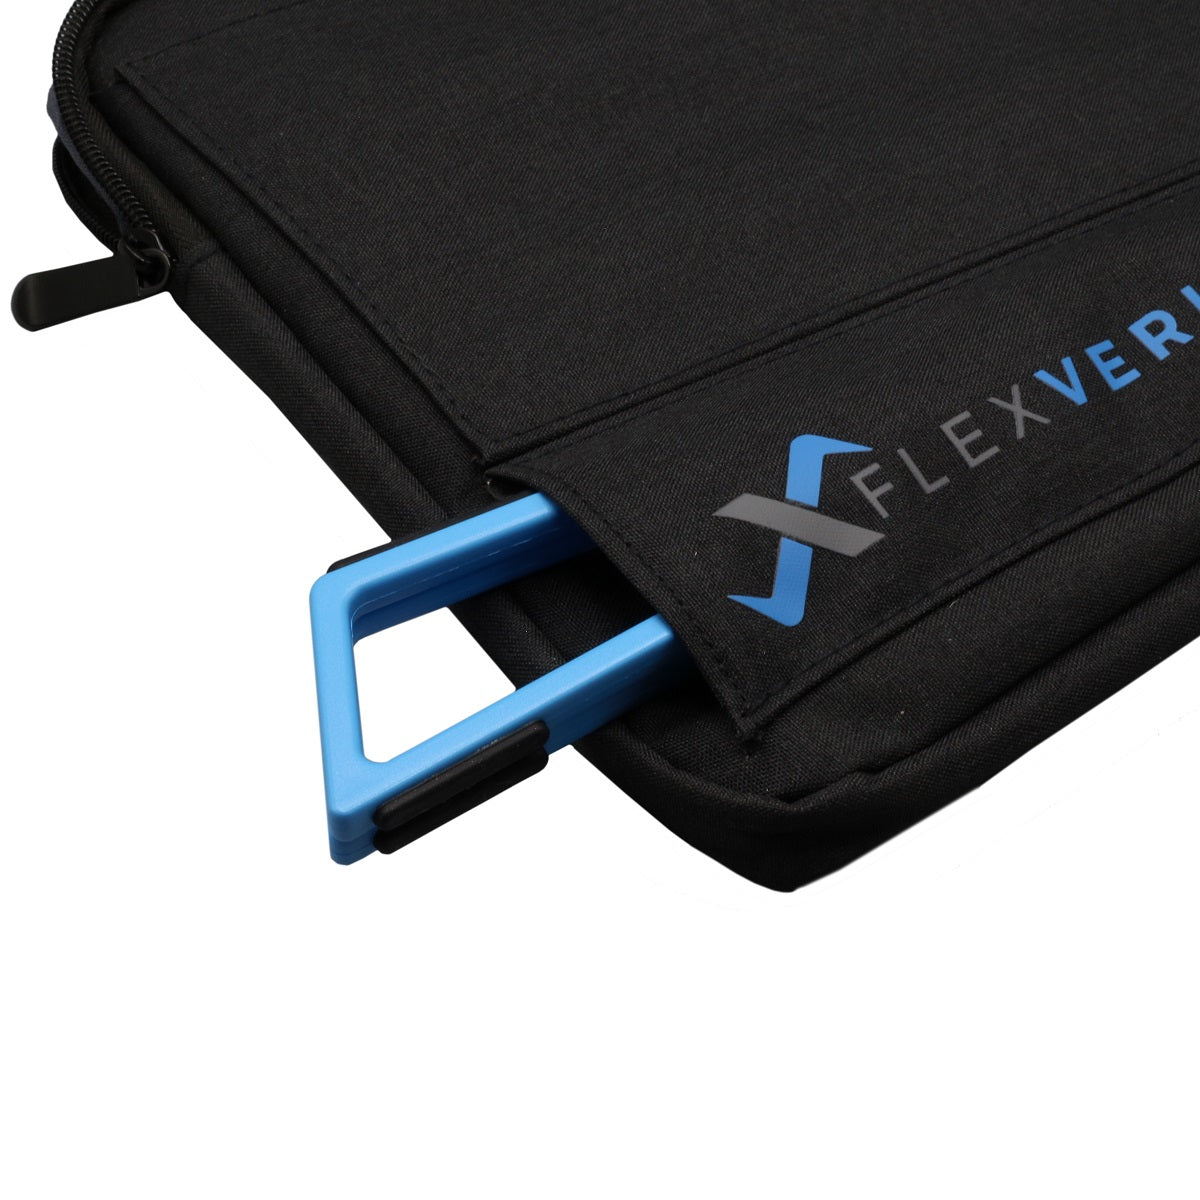 A Blue FlexVerk Laptop Stand shown inserted into a gray FlexVerk Laptop Sleeve on a white background.